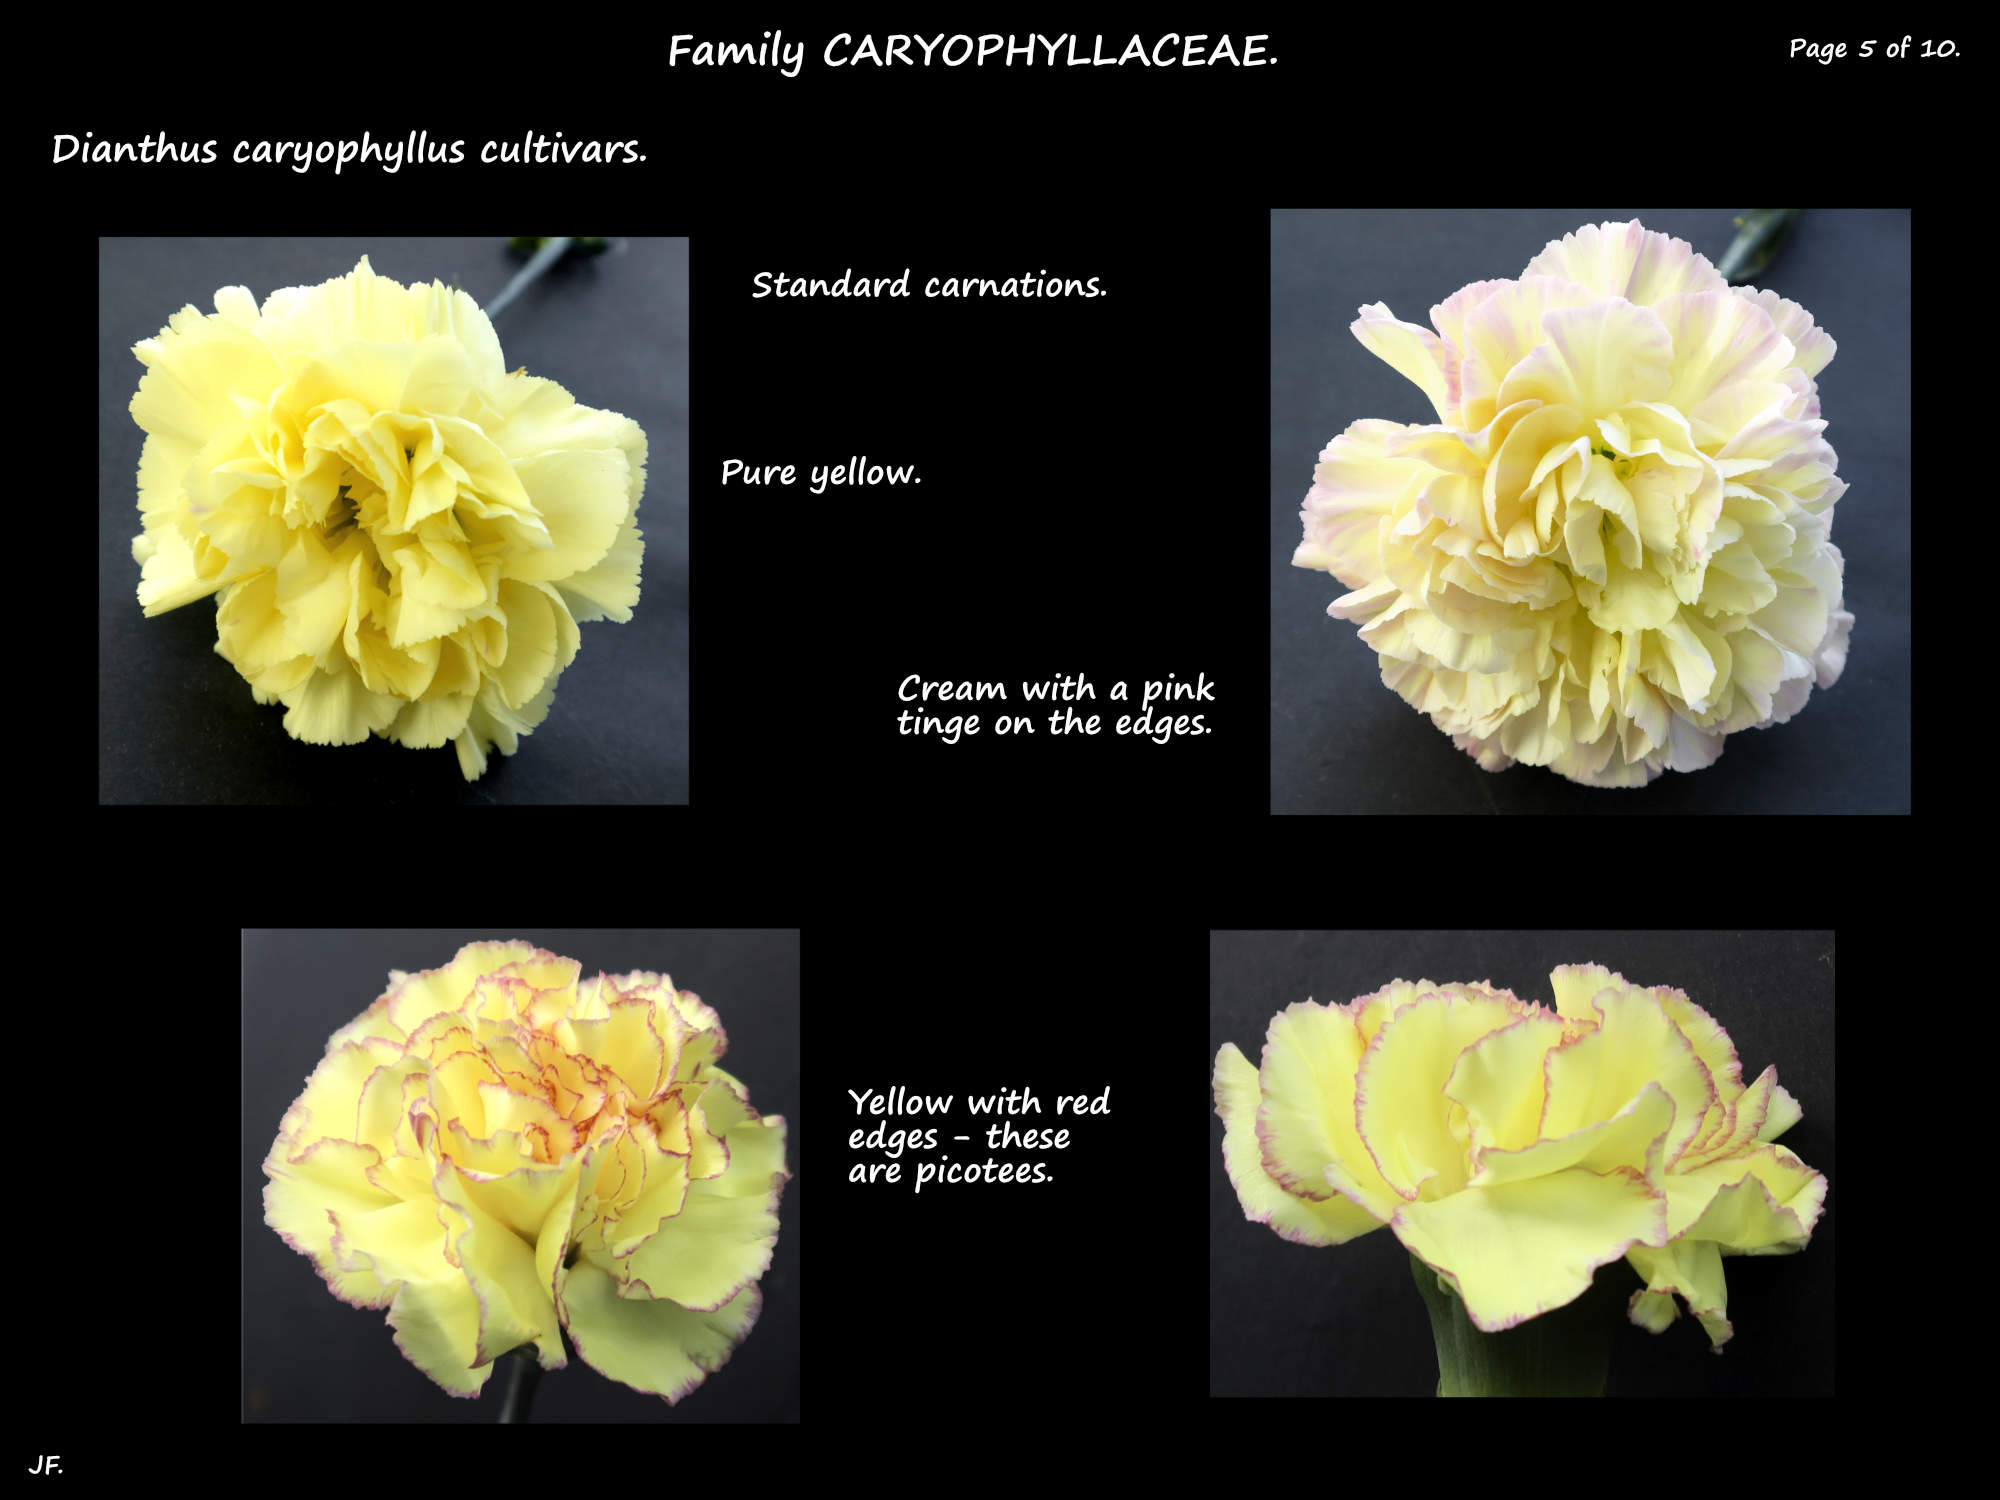 5 Yellow standard carnations